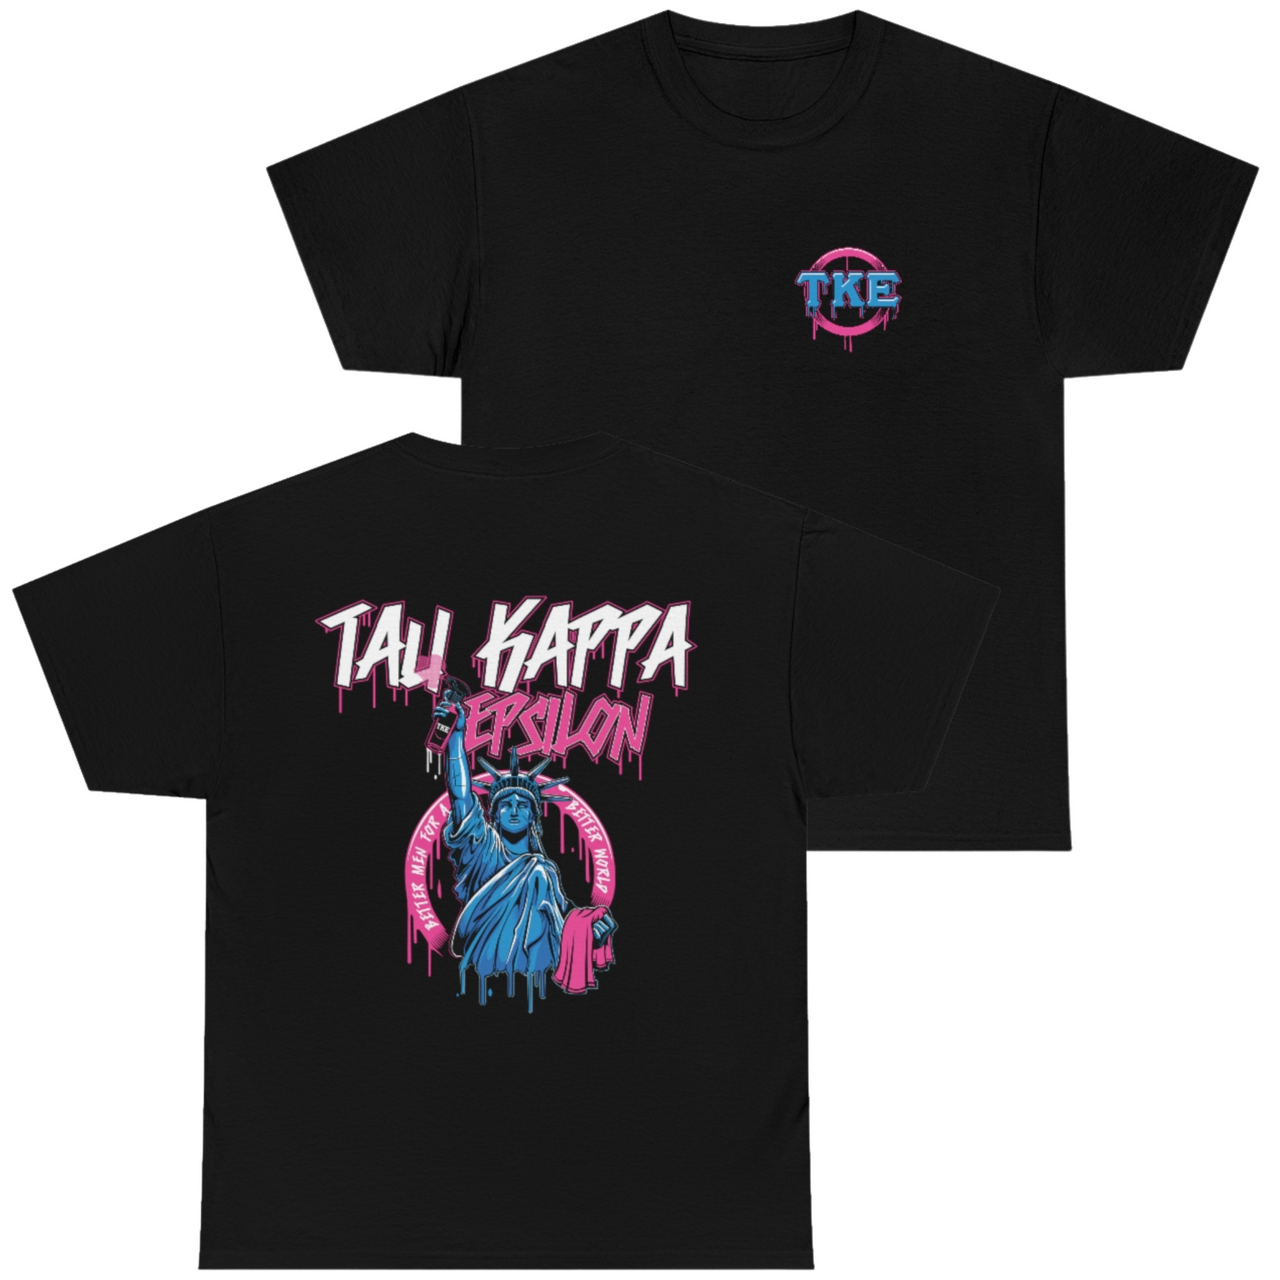 Black Tau Kappa Epsilon Graphic T-Shirt | Liberty Rebel | TKE Clothing and Merchandise